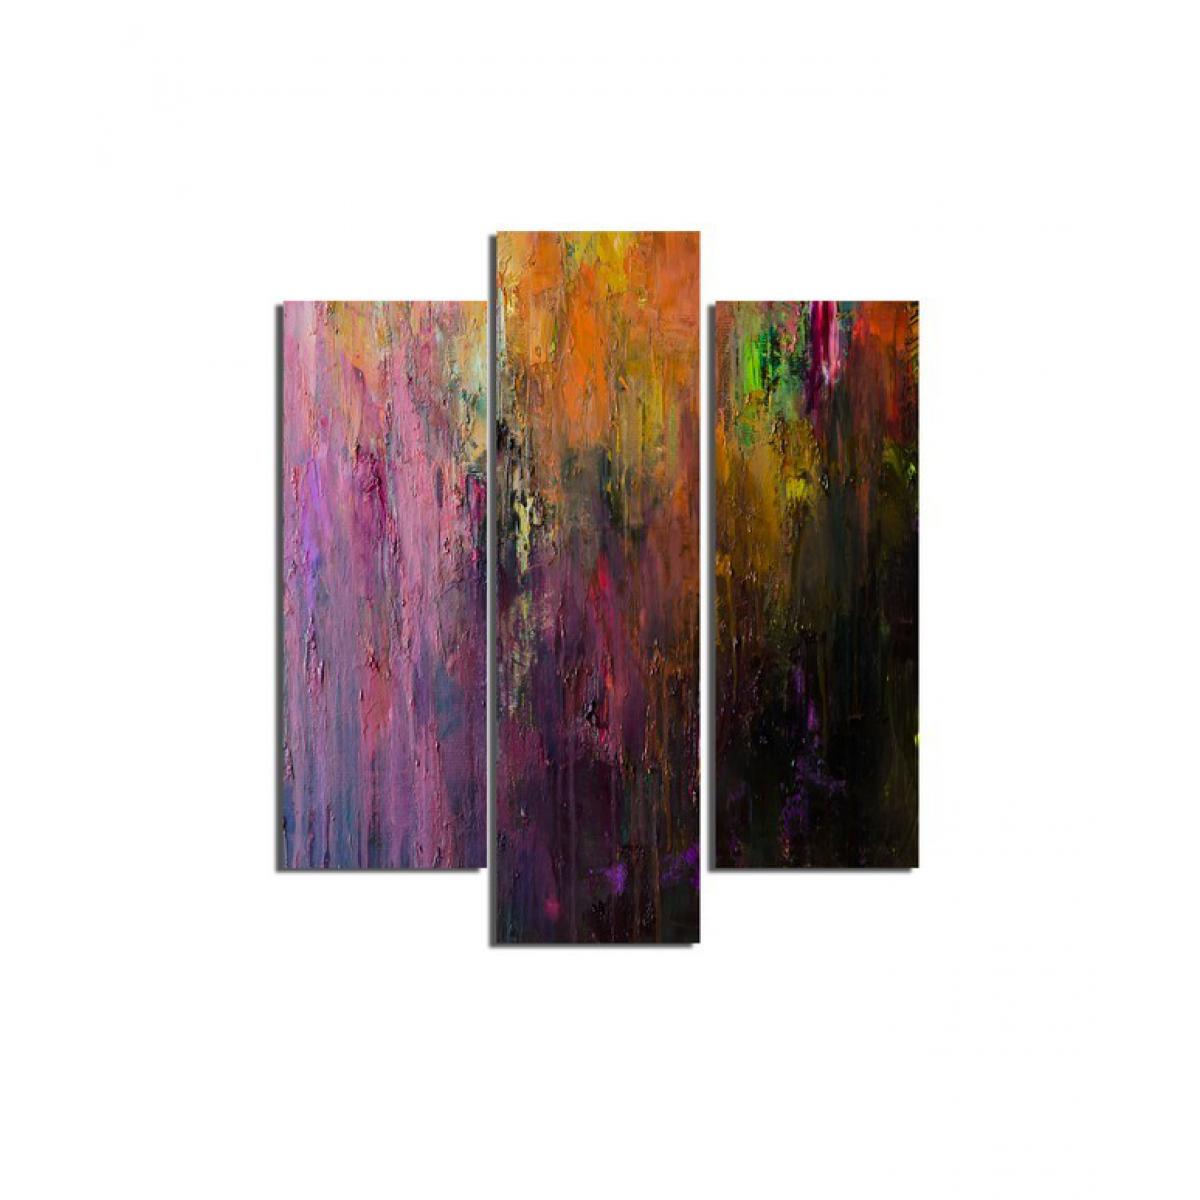 Homemania - HOMEMANIA Tableau Pluie - 3 Pieces - Abstract - from Living Room, Room - Multicouleur en MDF, 57 x 0,3 x 60 cm - Tableaux, peintures